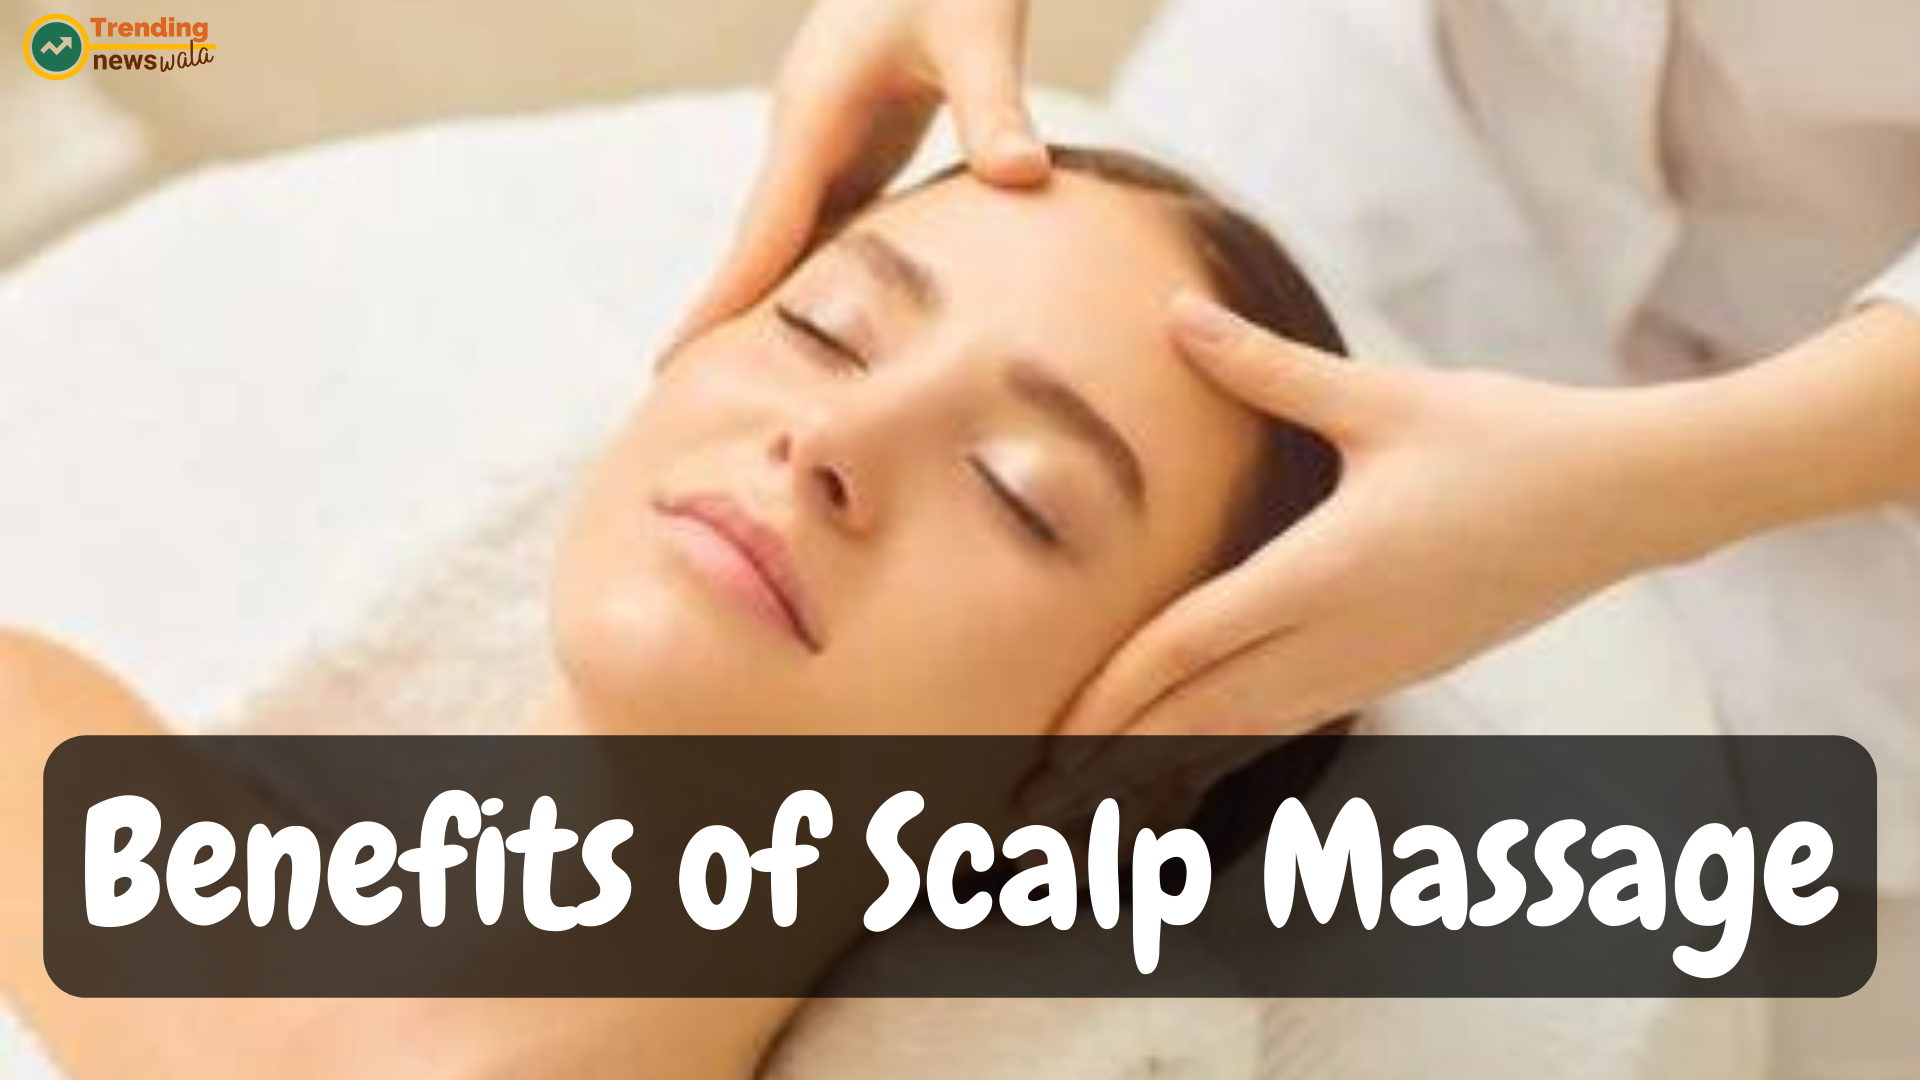 10 Benefits of Scalp Massage